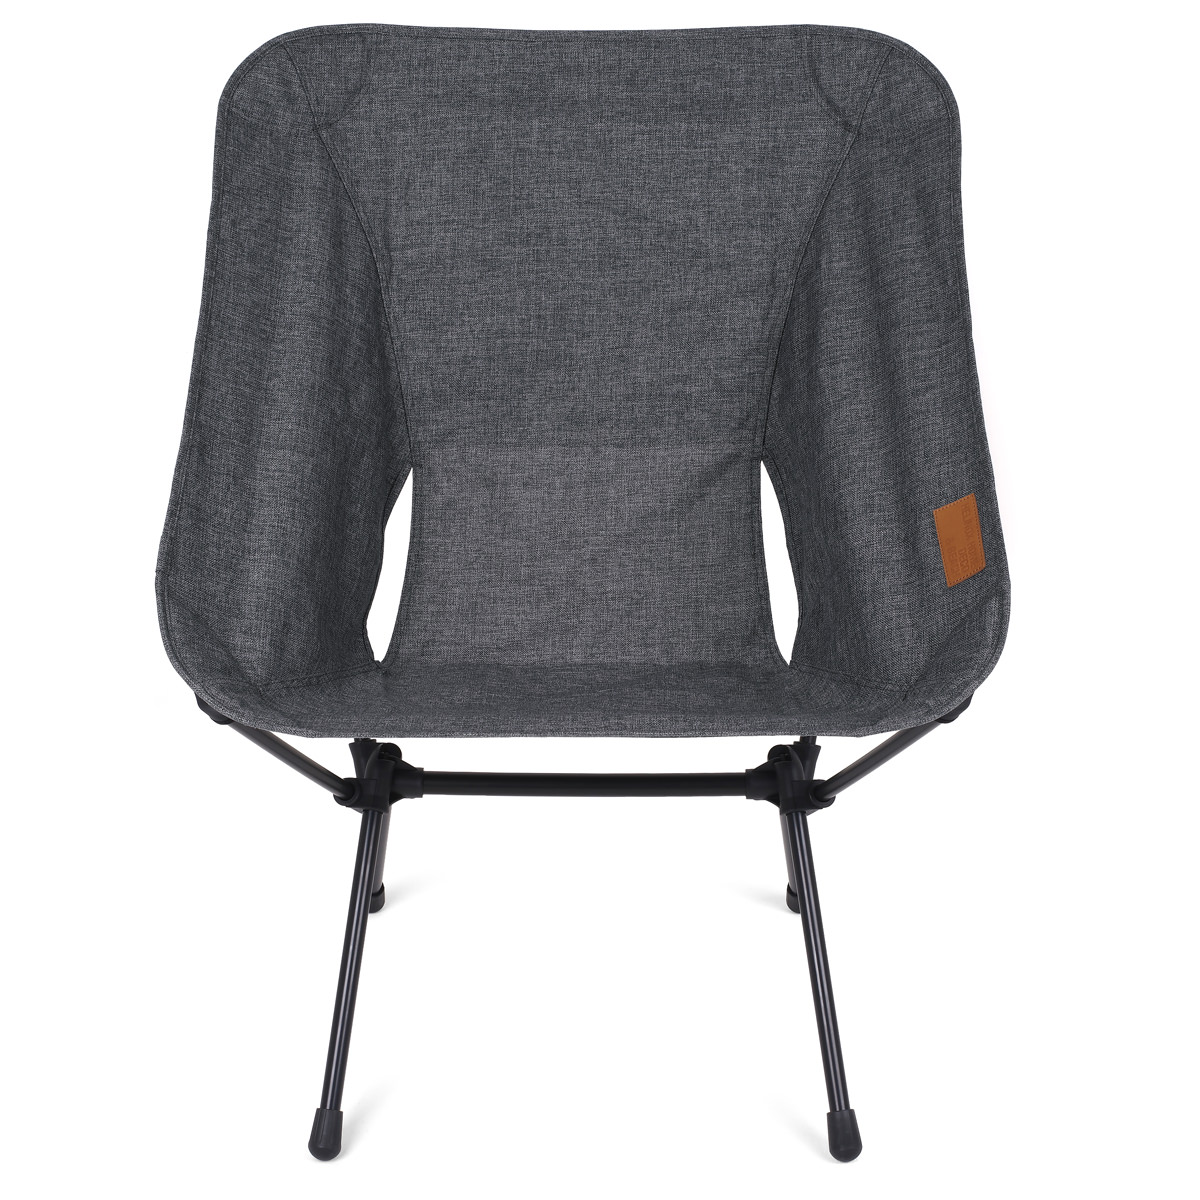 Chair One Home XL